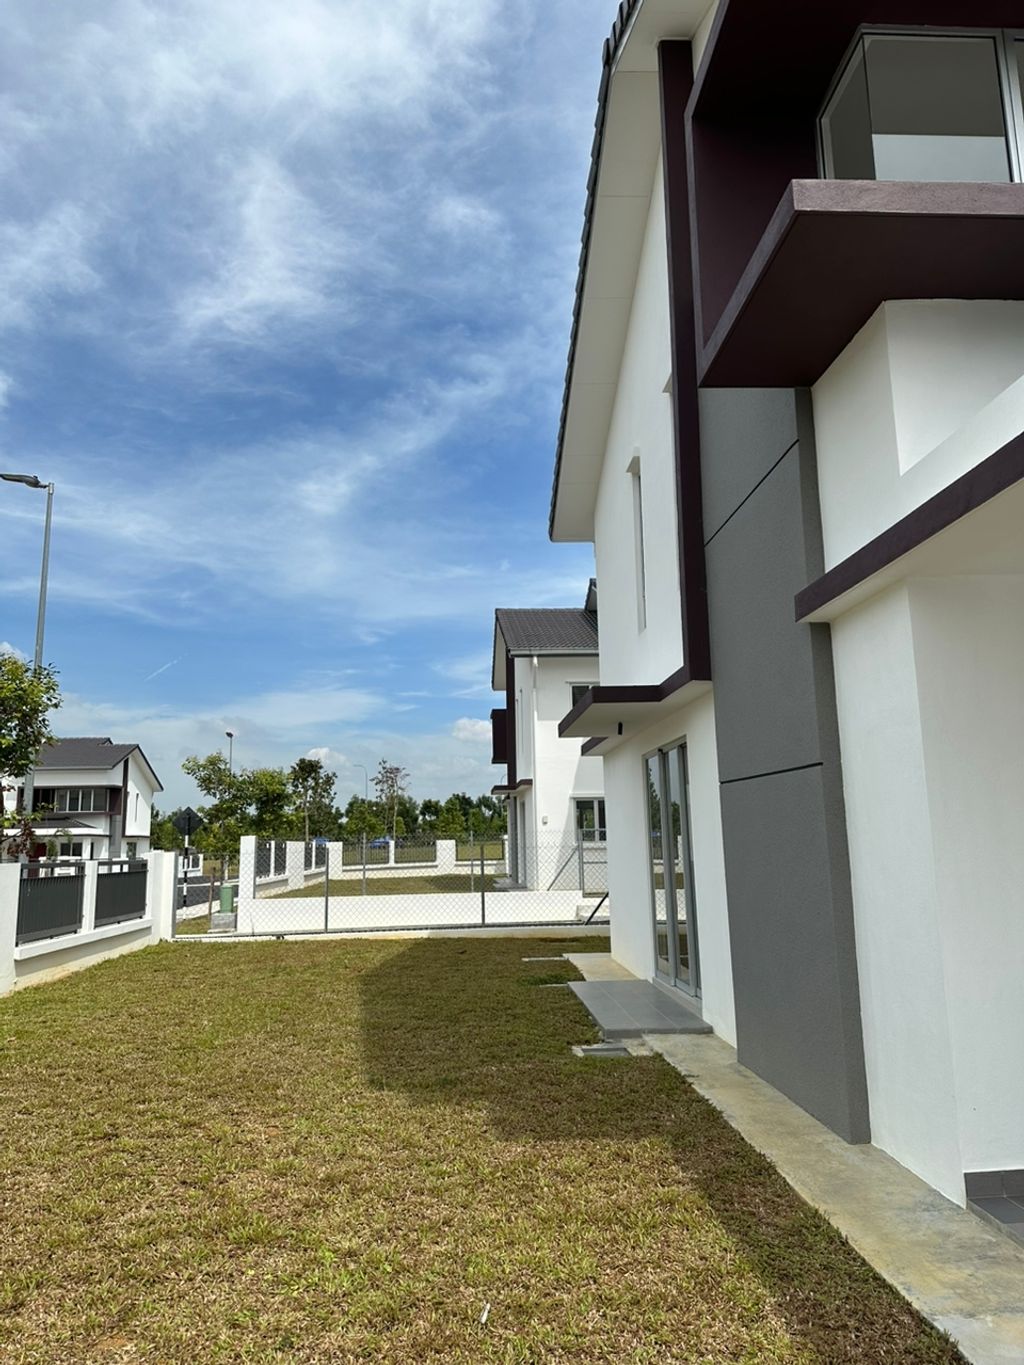 Brand New Non Bumi End Lot 2 Storey Bandar Rimbayu BSP, Telok Panglima  Garang, Kuala Langat, Selangor, 5 Bedrooms, 2781 sqft, T SALE, by Amirul  Nasyriq, 39505560